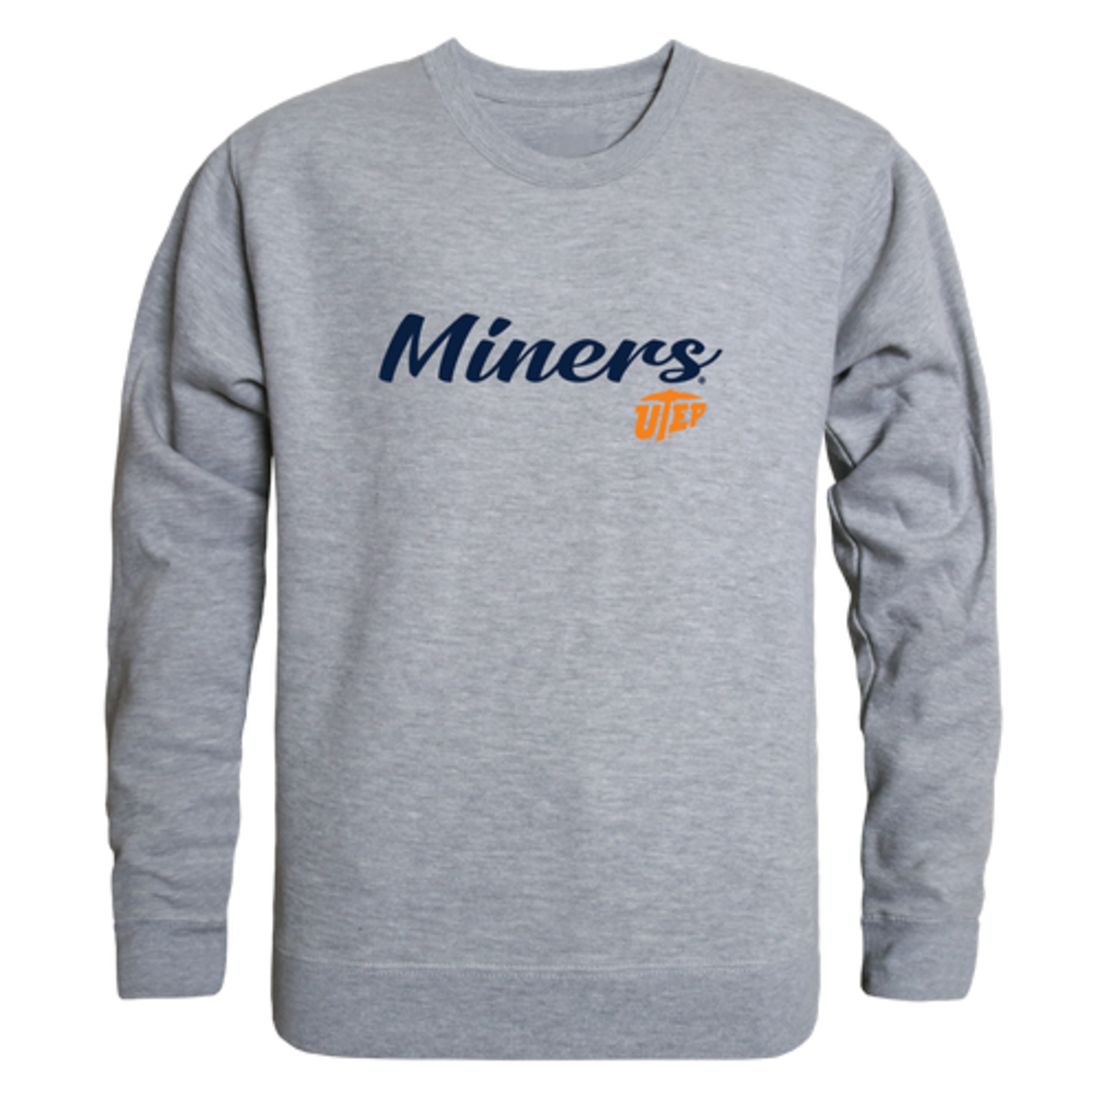 UTEP University of Texas at El Paso Miners Script Crewneck Pullover Sweatshirt Sweater Heather Charcoal-Campus-Wardrobe